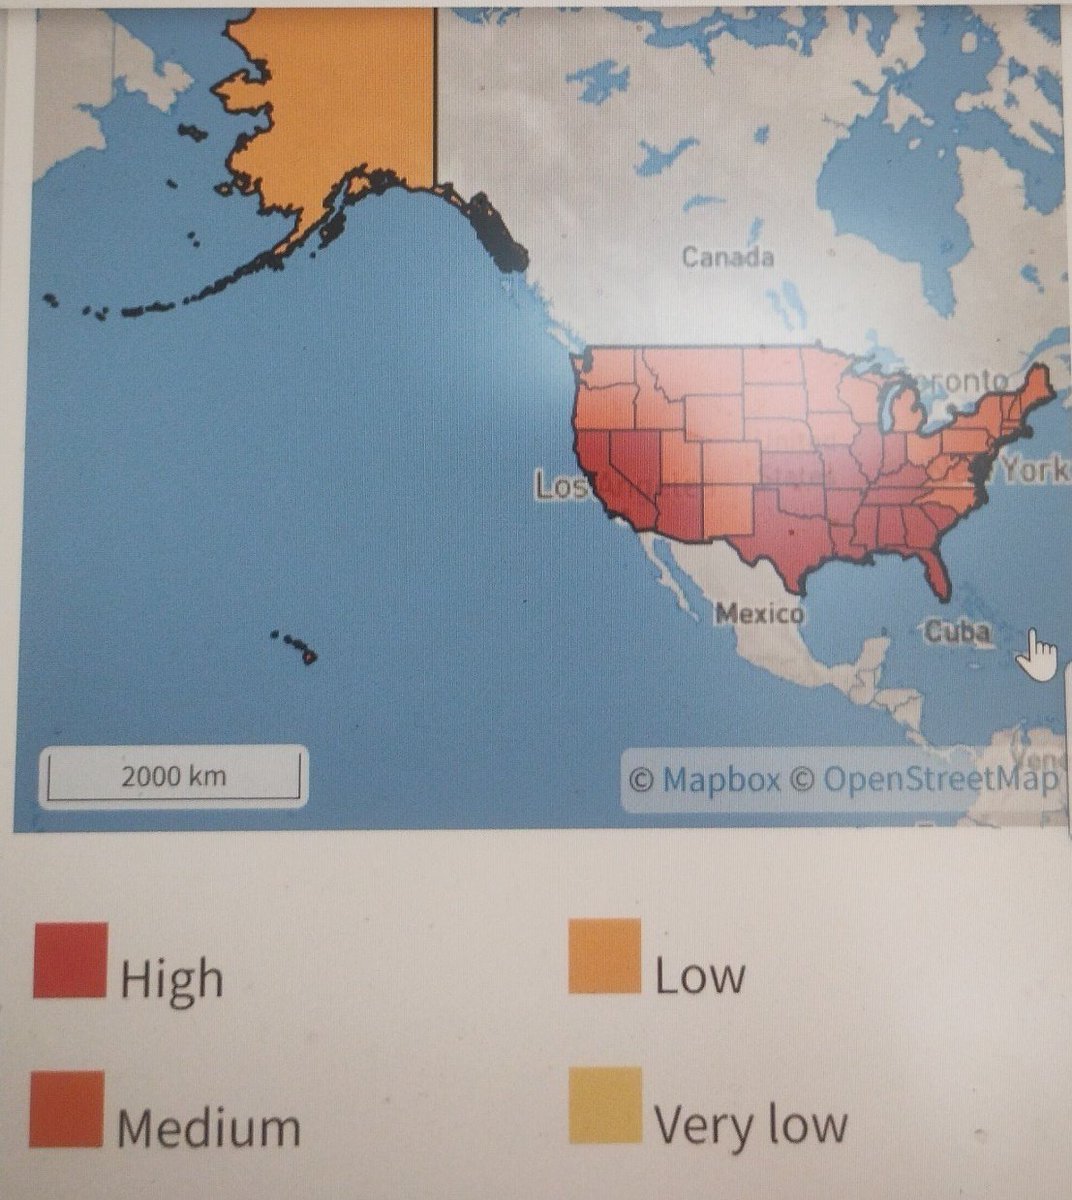 Extreme Heat Climate Risk profile of USA #USA #ClimateEmergency #HeatWave #risk #physicalrisk #climaterisk